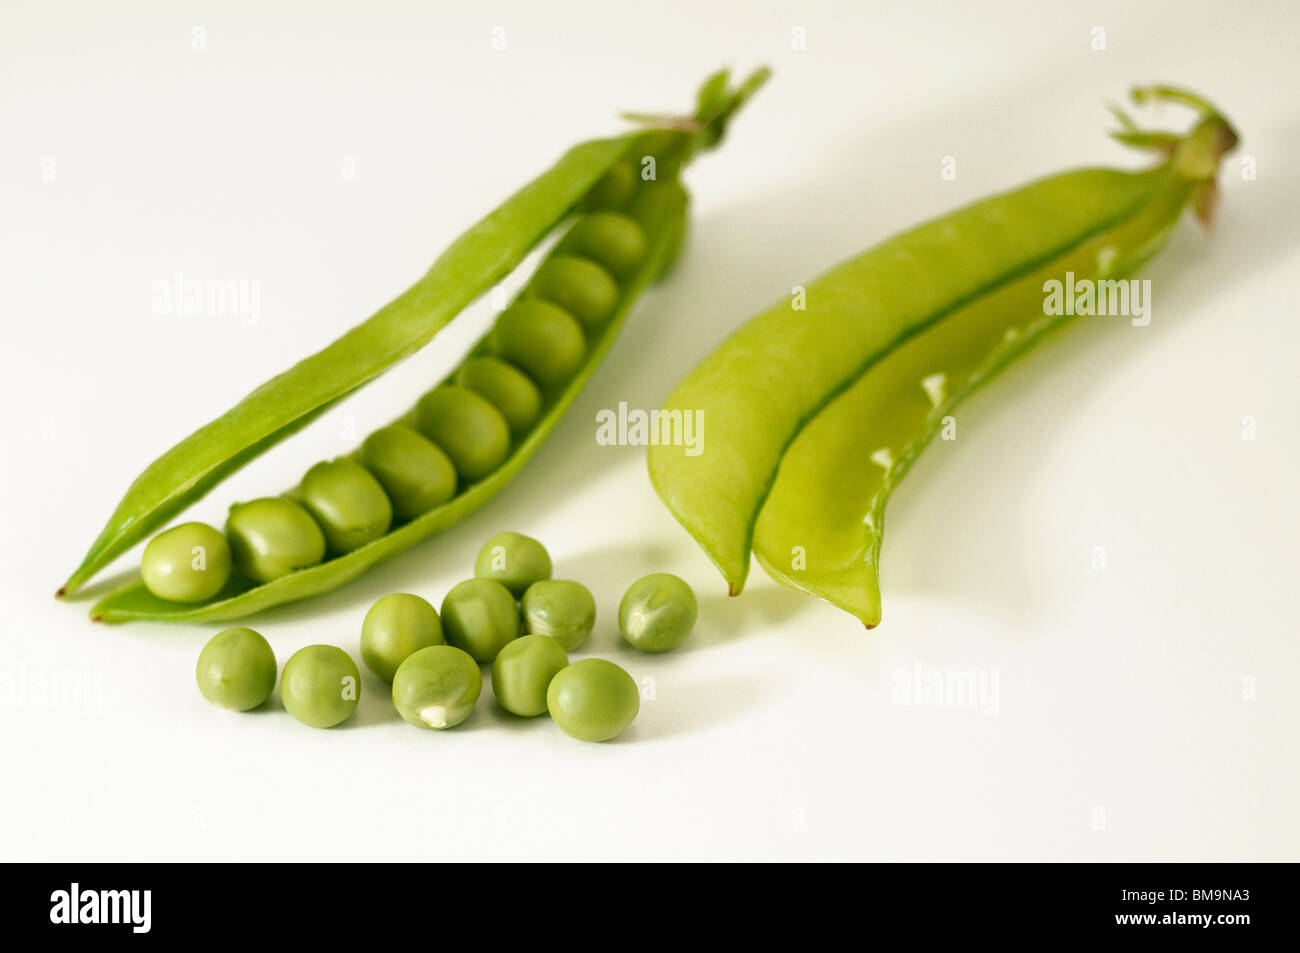 Garden Pea, Pea (Pisum sativum). Opened unripe pods and green peas, studio picture. Stock Photo